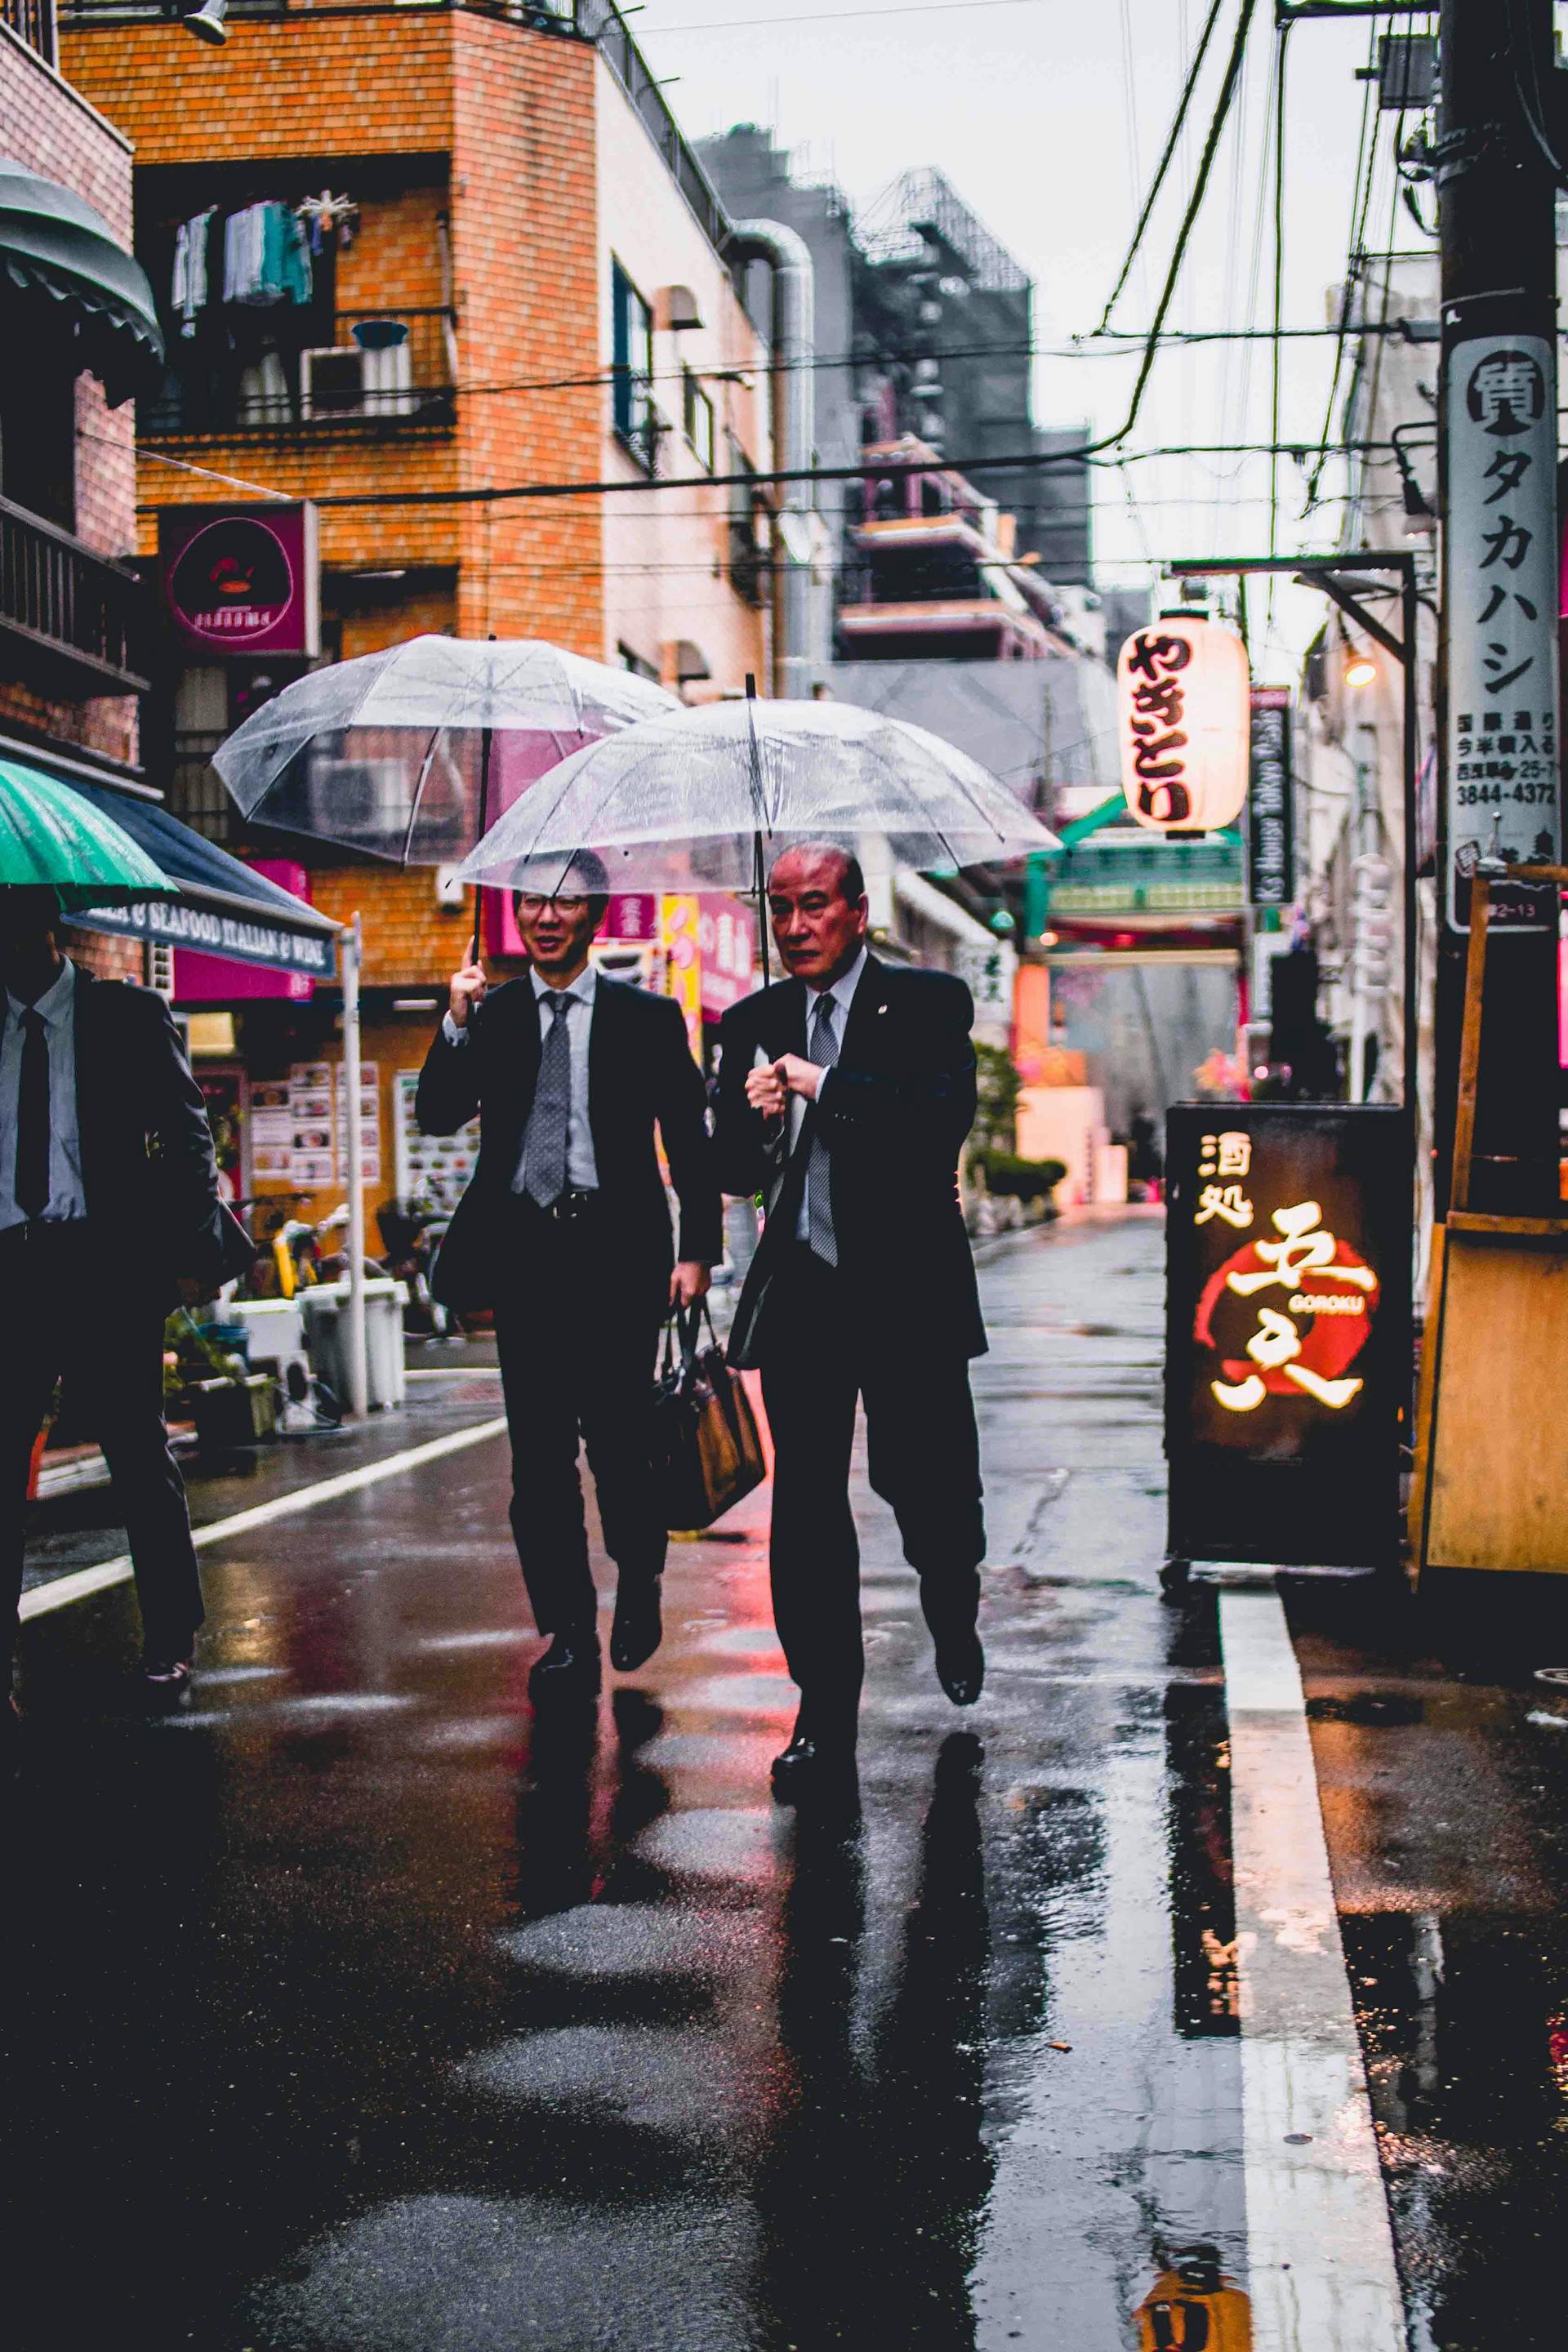 Japanese "salarymen", which represent Japanese workplace culture. Photo source: Redd F (Unsplash)